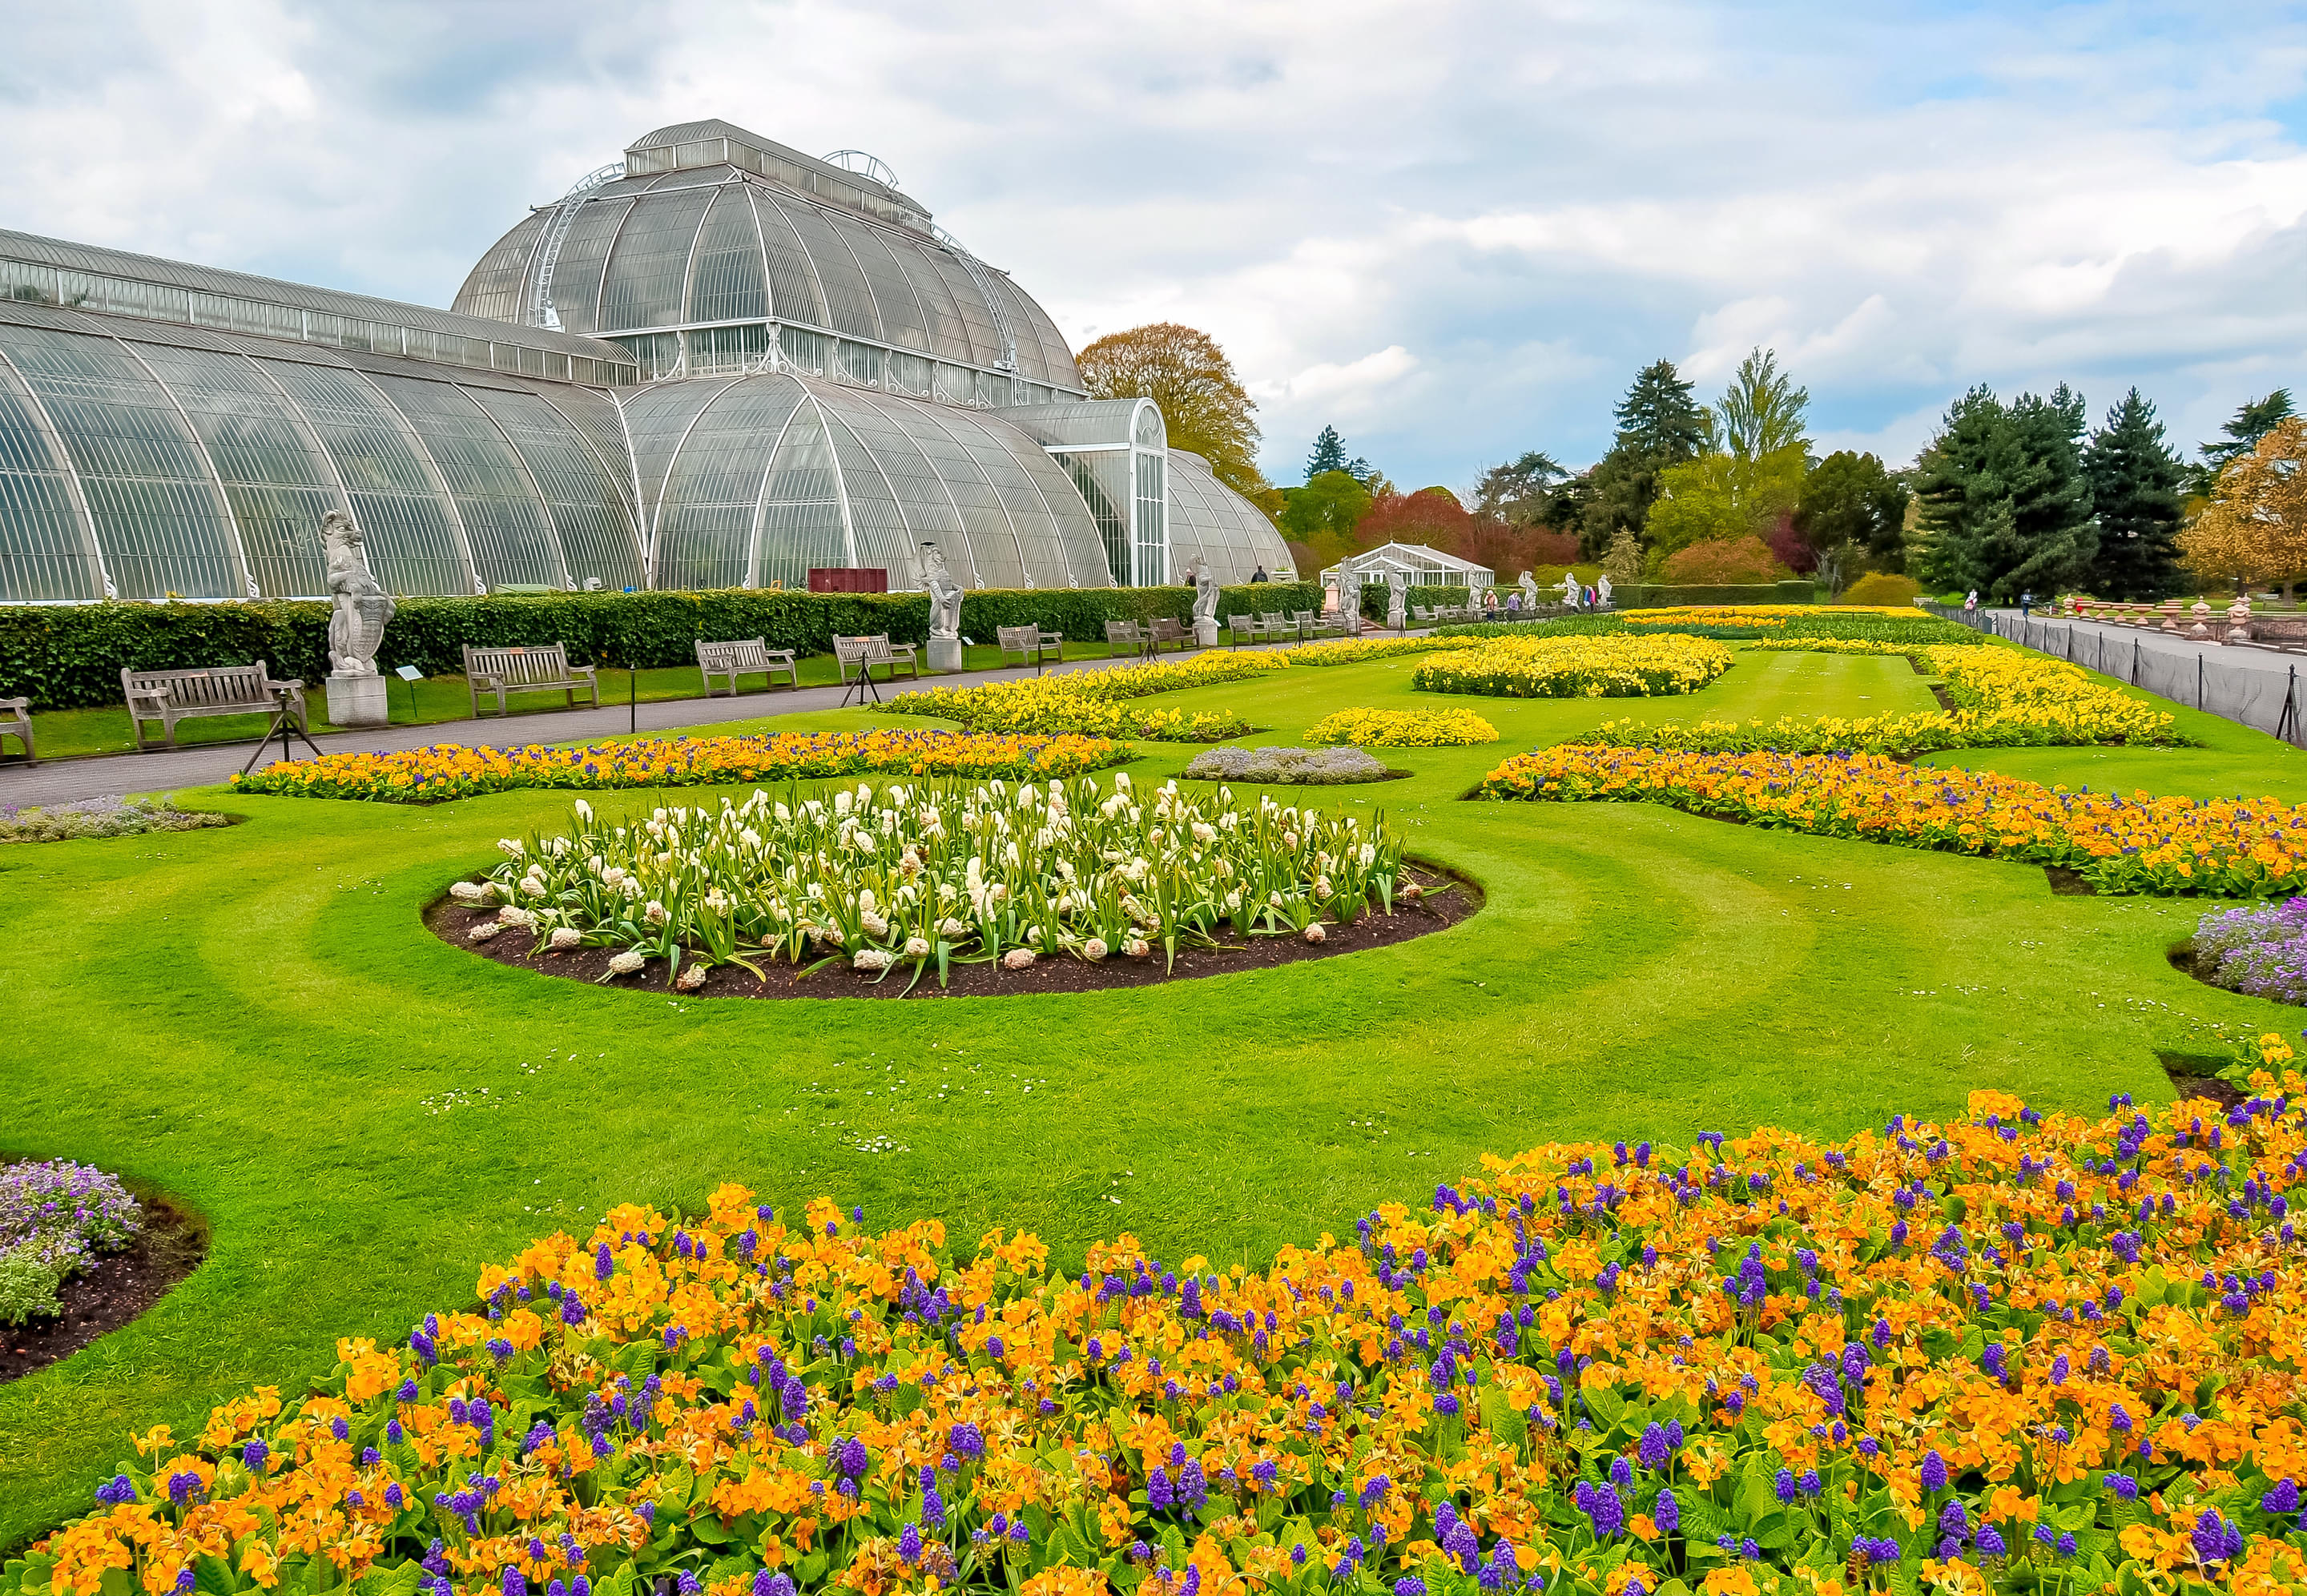 Royal Botanic Gardens Overview